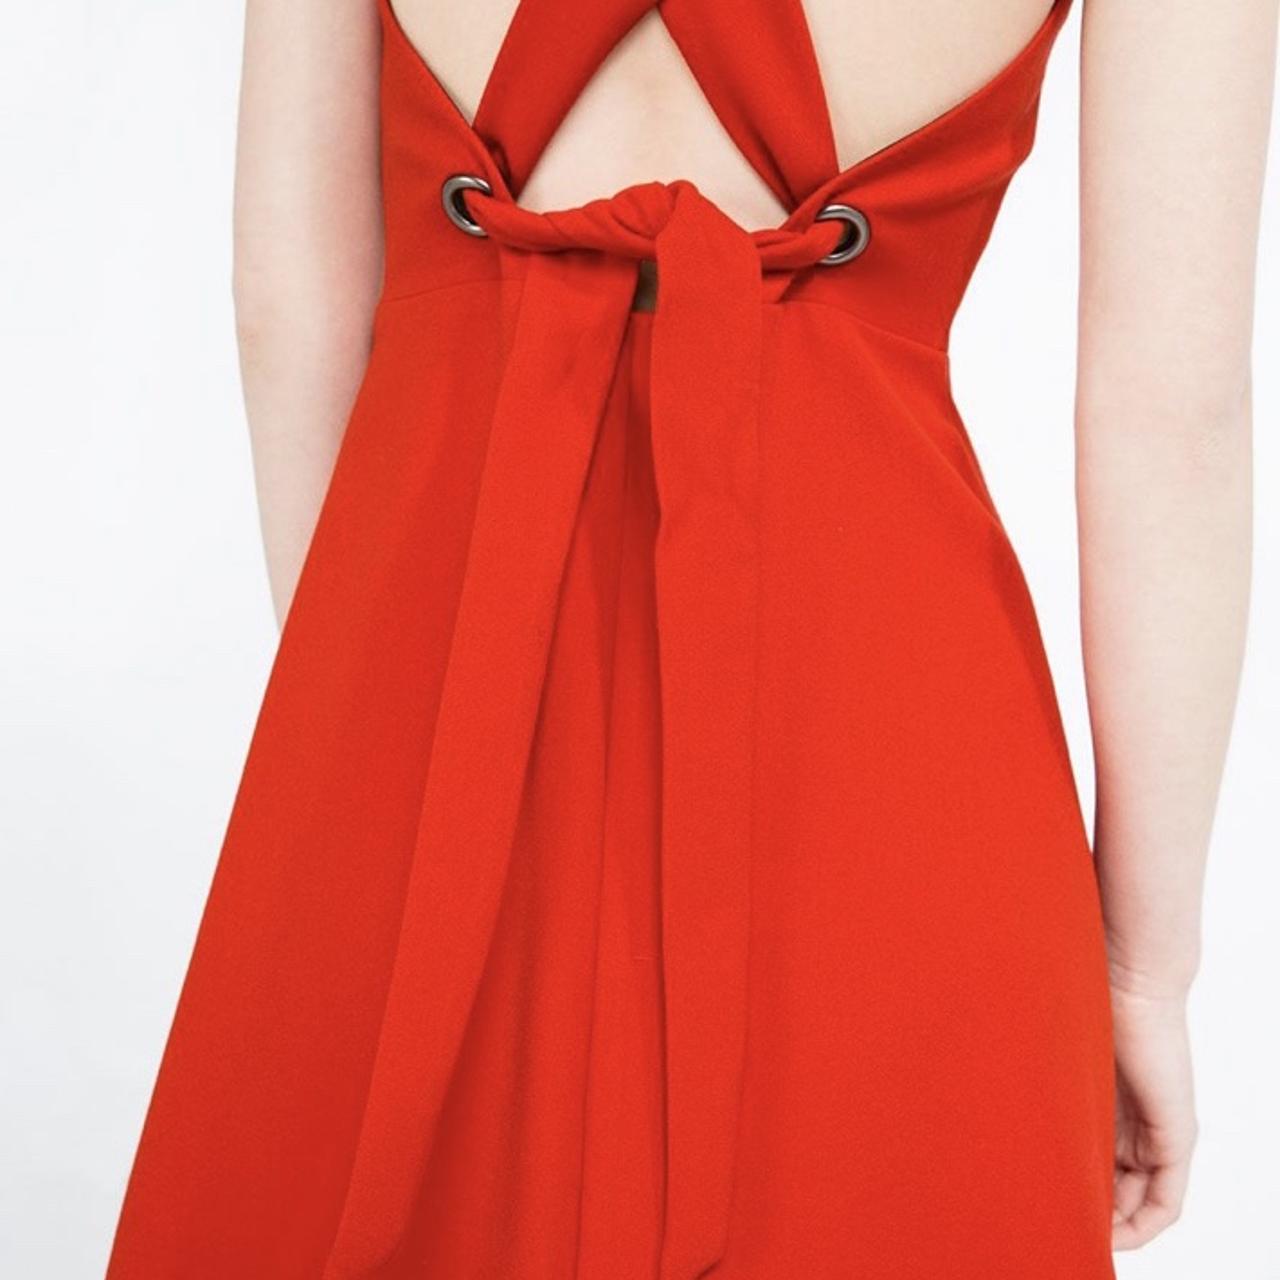 Red Zara dress ️ Brand new unworn RRP £25.99 sold... - Depop